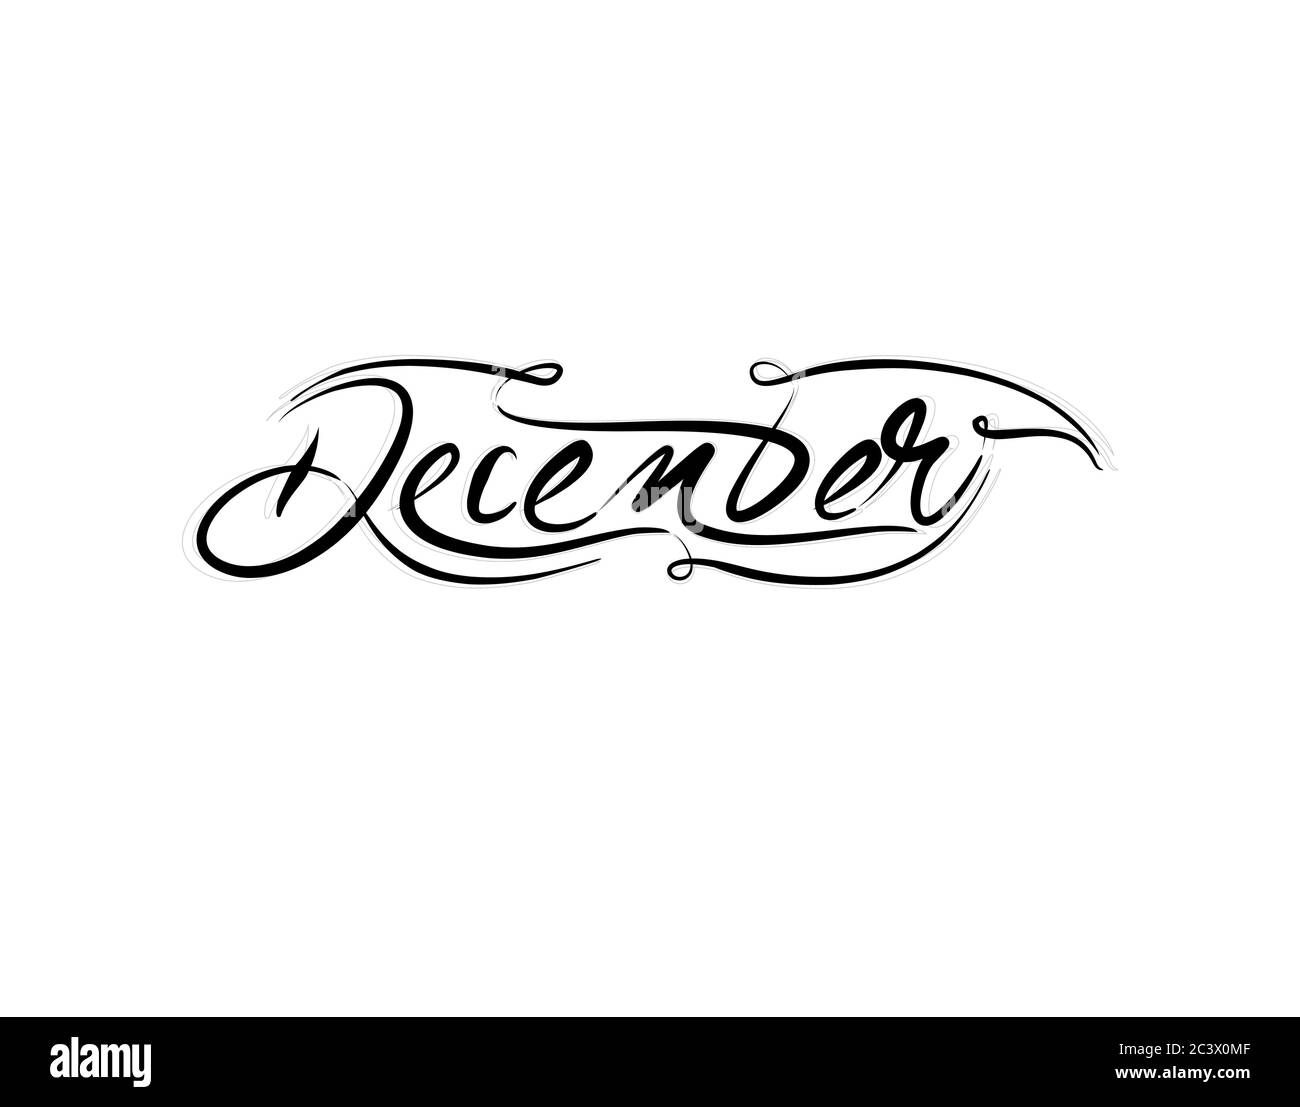 December Lettering Text on white background in vector illustration ...